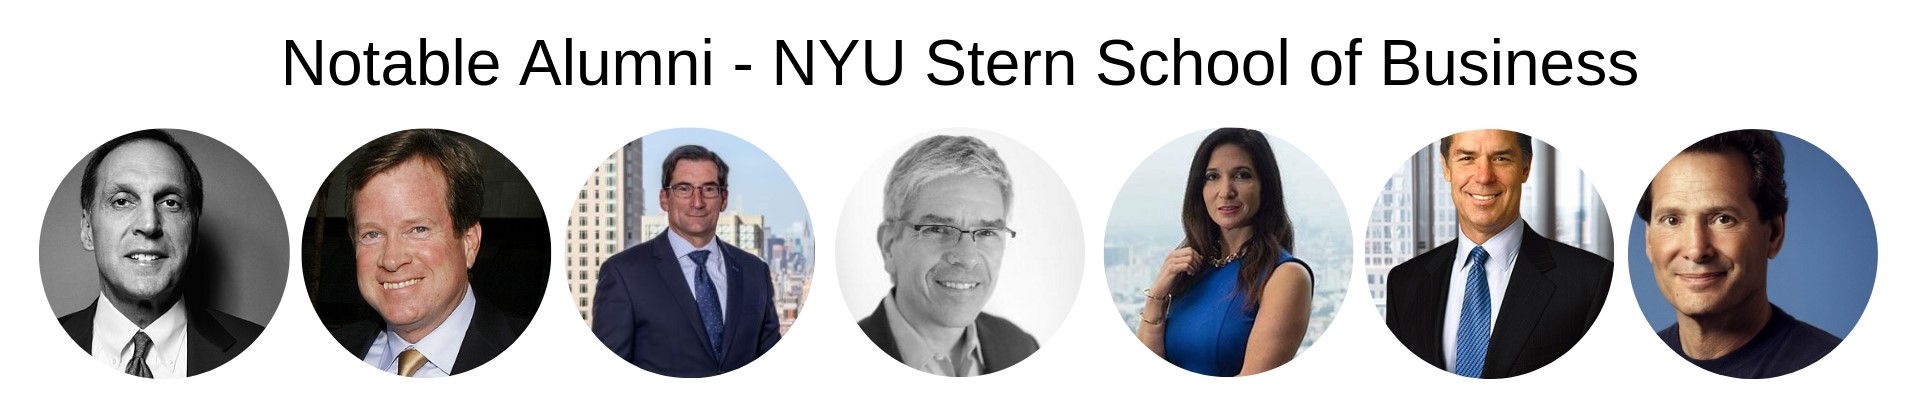 NYU Stern School of Business, Stern MBA Program - Notable Alumni